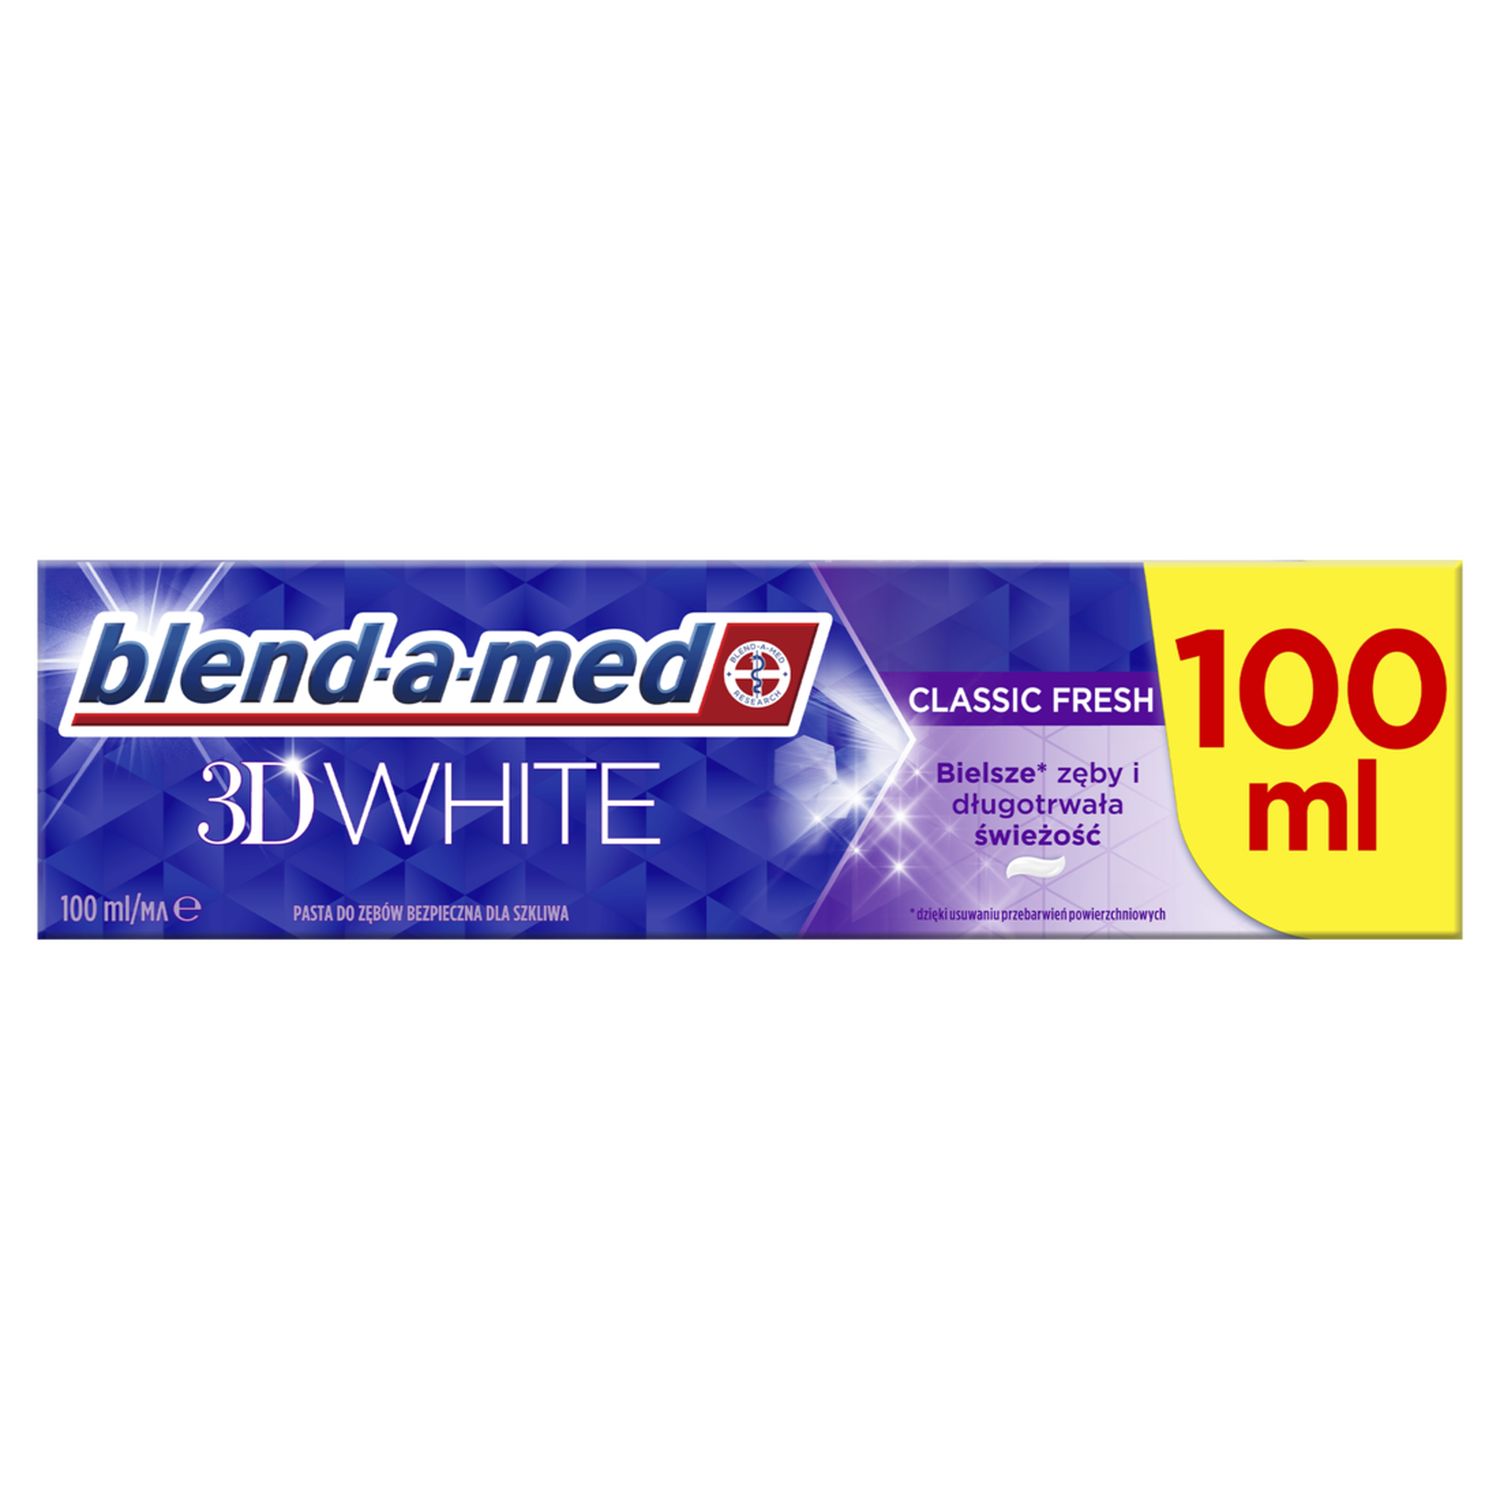 Зубная паста Blend-a-med 3D White Классическая свежесть 100 мл - фото 3